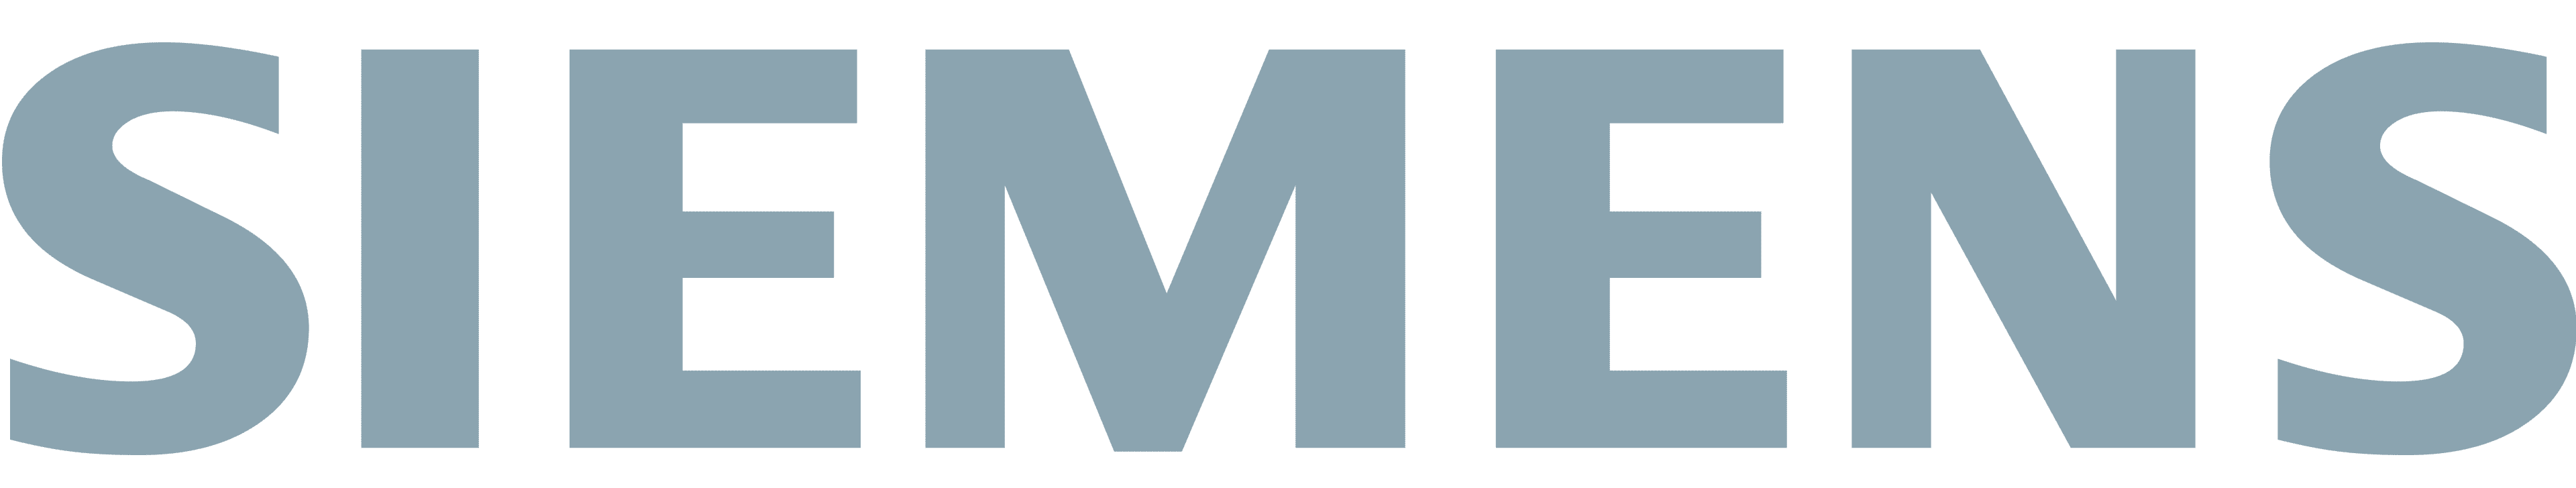 Siemens-Logo-Recovered